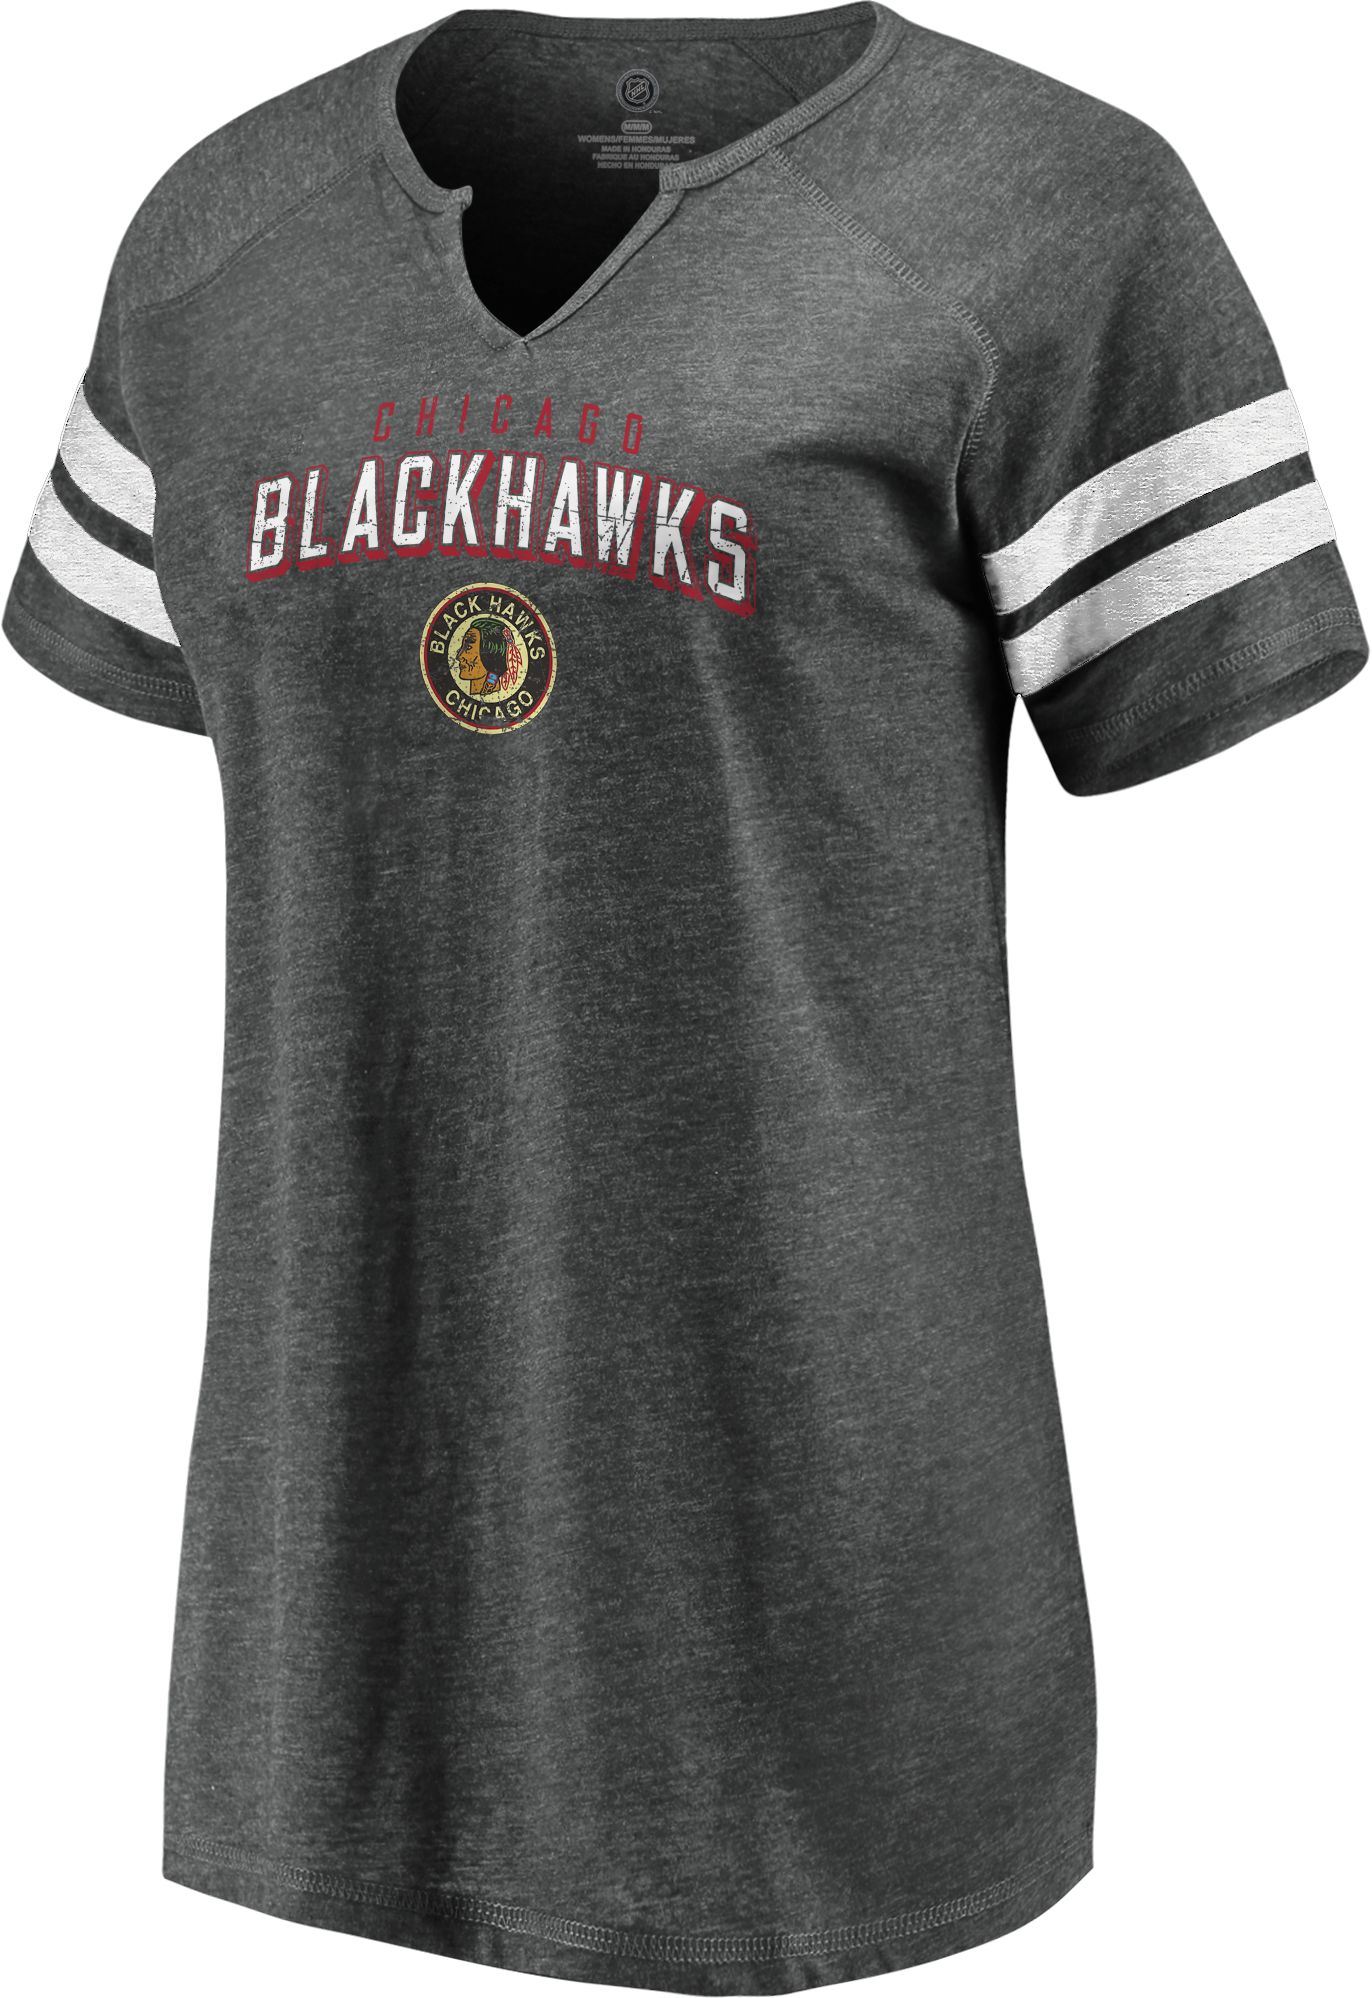 grey blackhawks jersey